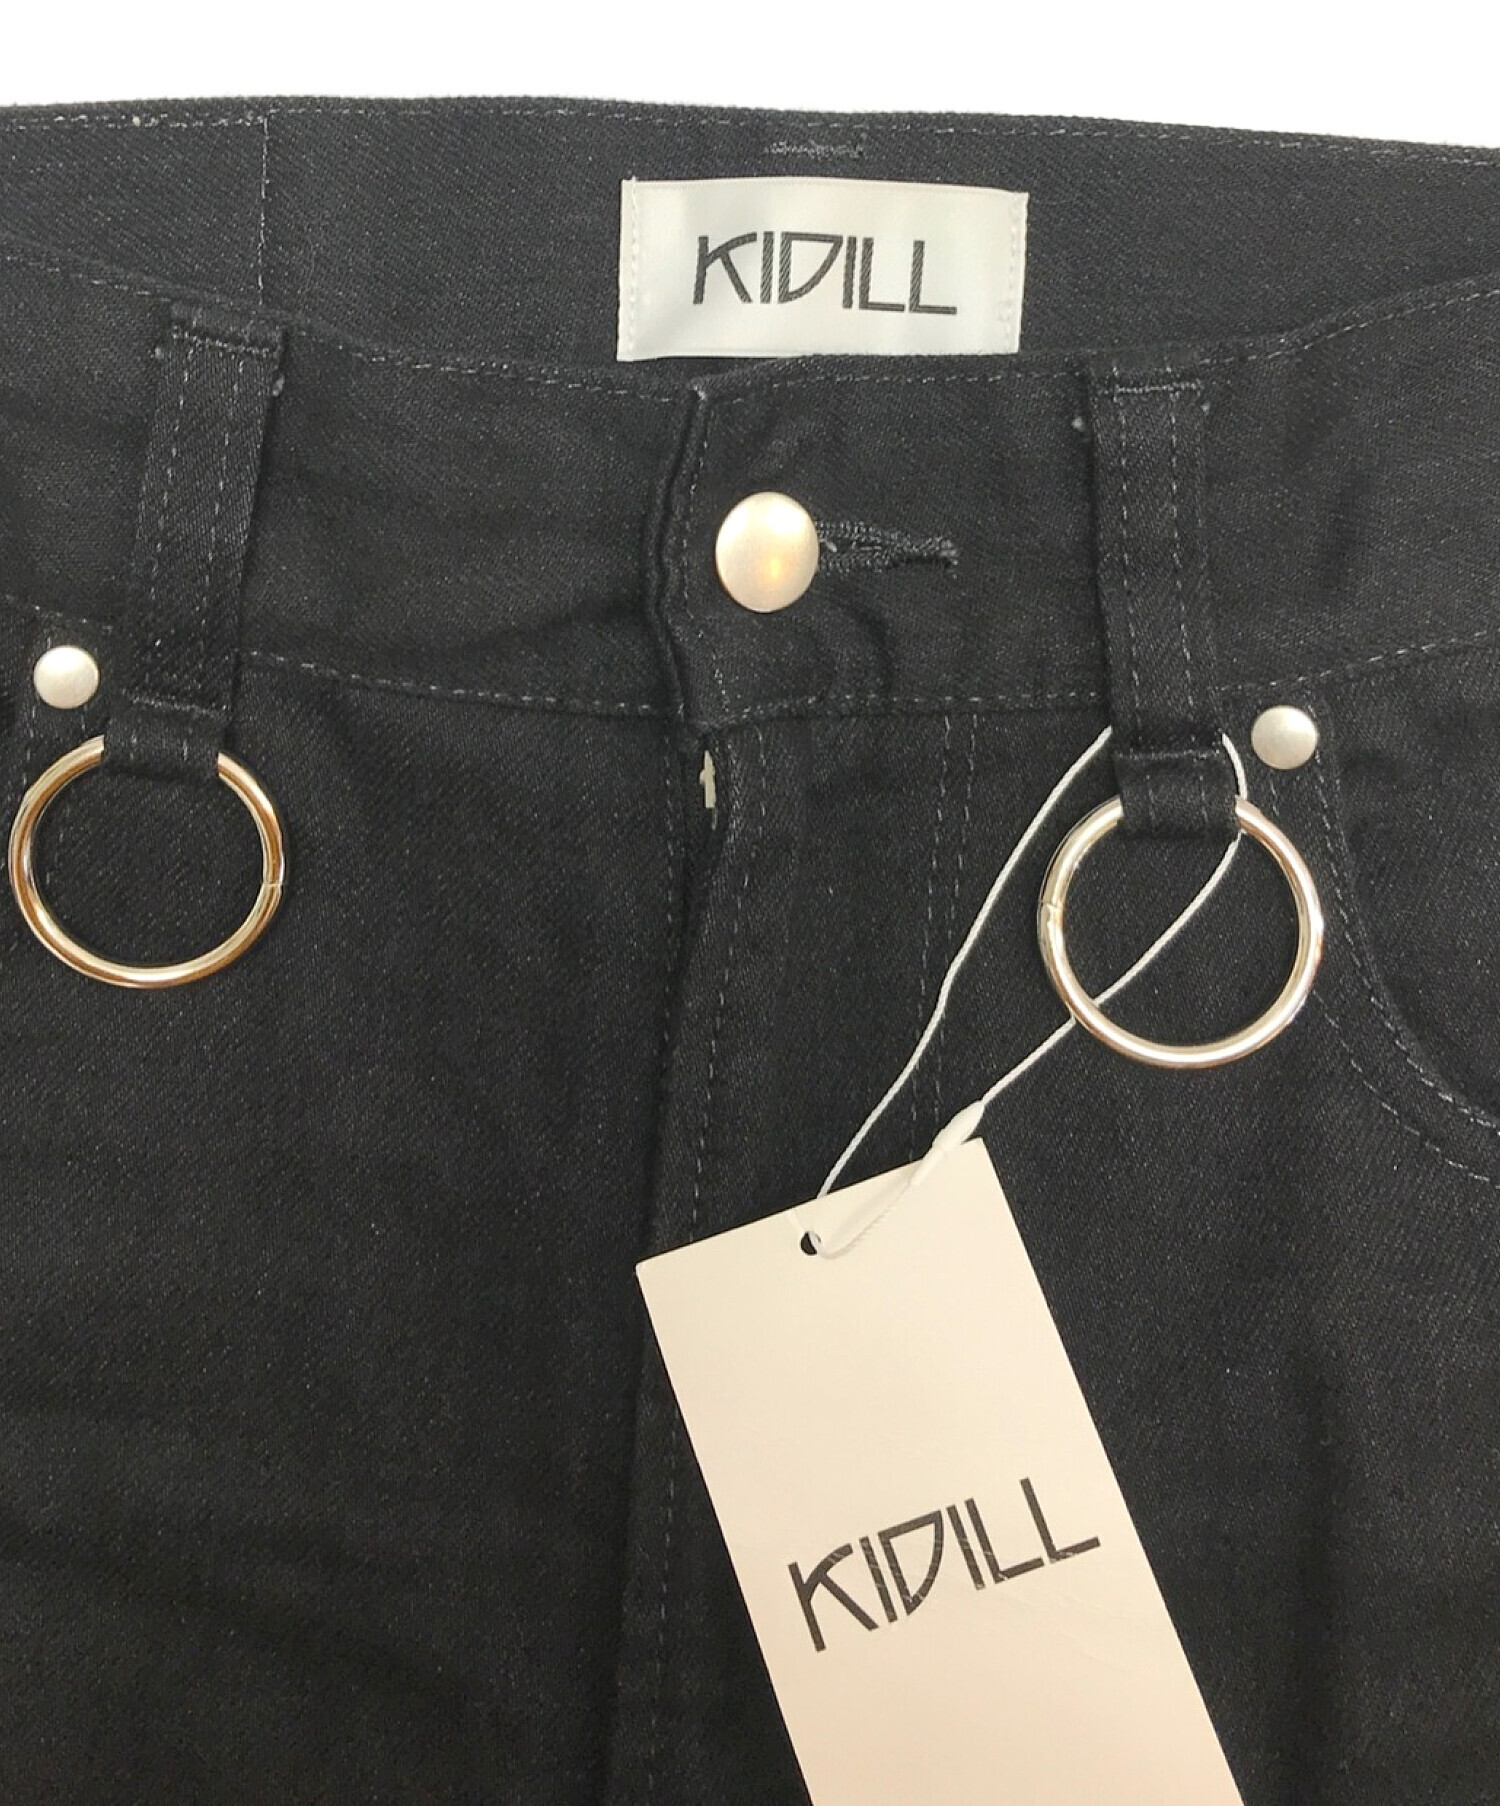 KIDILL (キディル) スタッズ装飾デニムパンツ ブラック サイズ:44